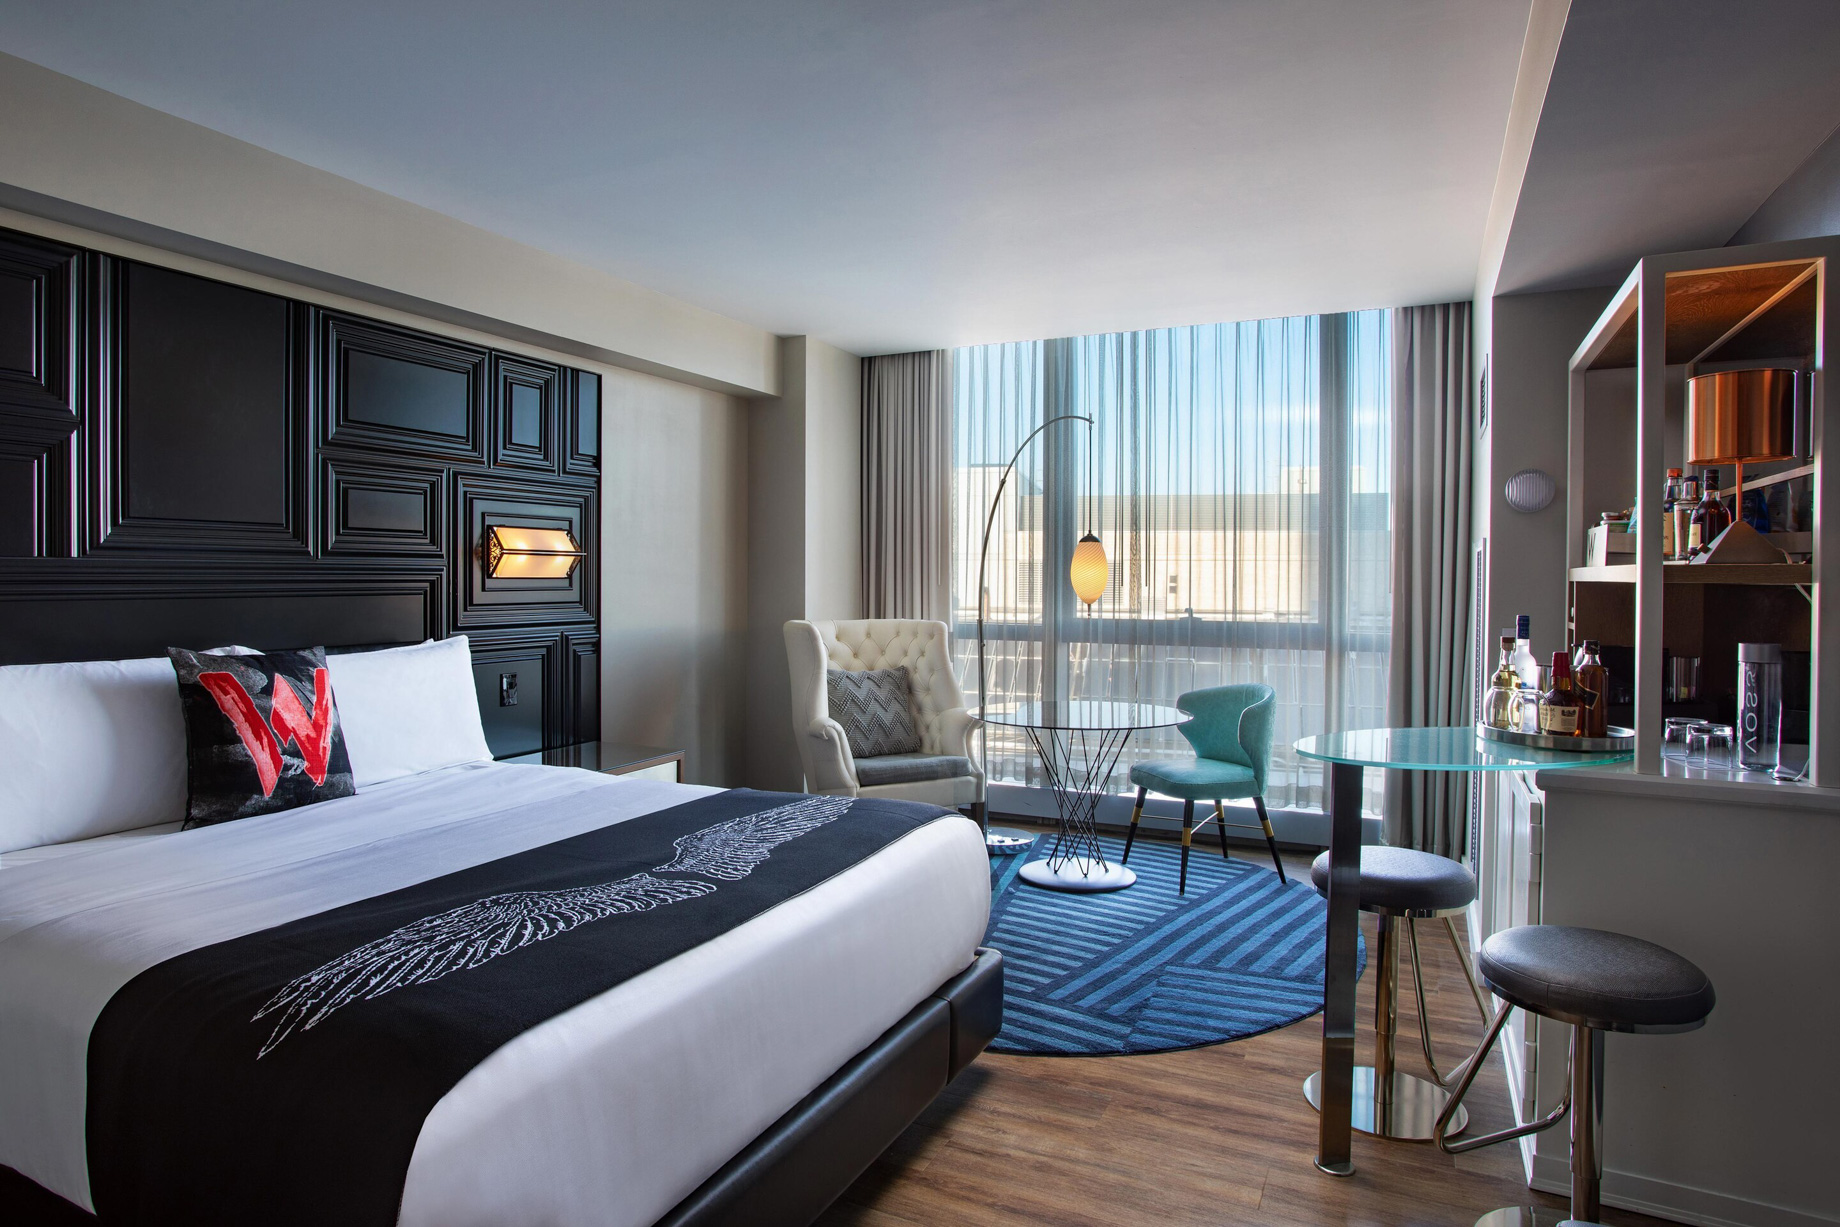 W Boston Hotel – Boston, MA, USA – Wonderful Guest Room Interior